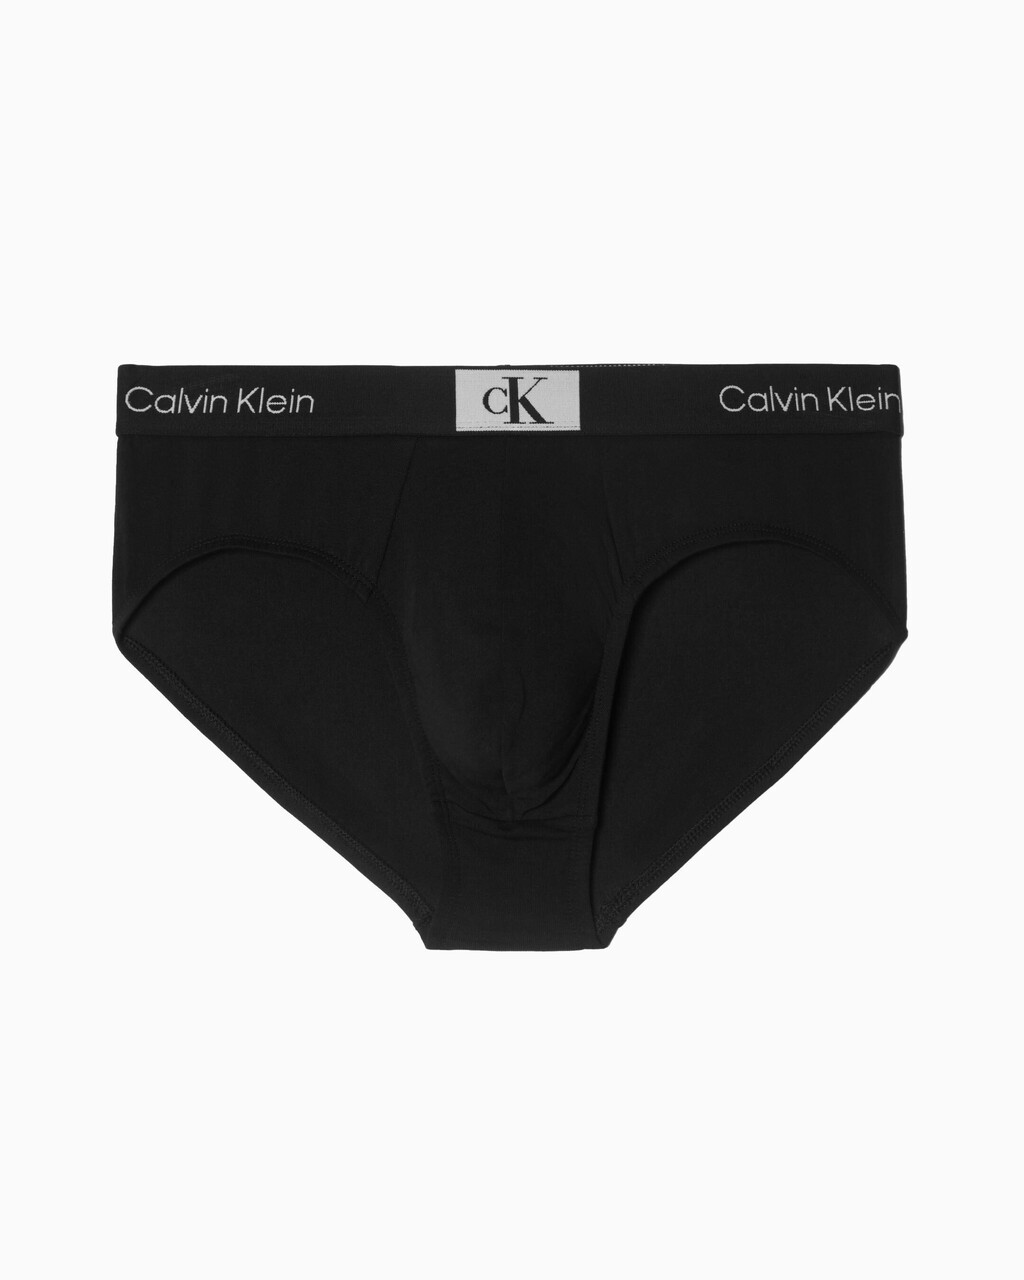 CALVIN KLEIN 1996 棉質低腰三角褲, Black, hi-res